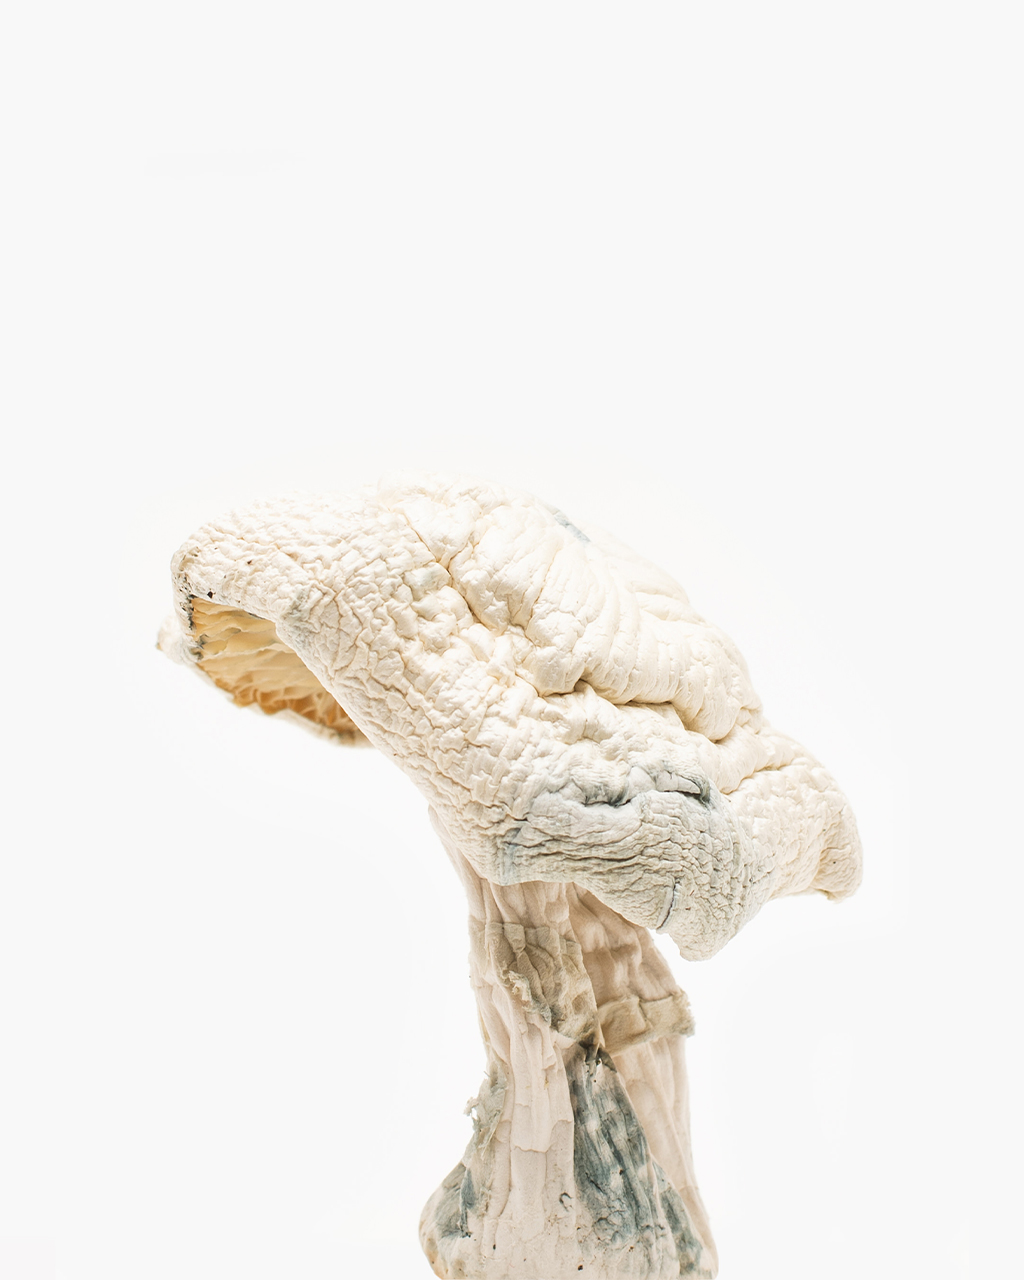 Avery Albino Magic Mushroom